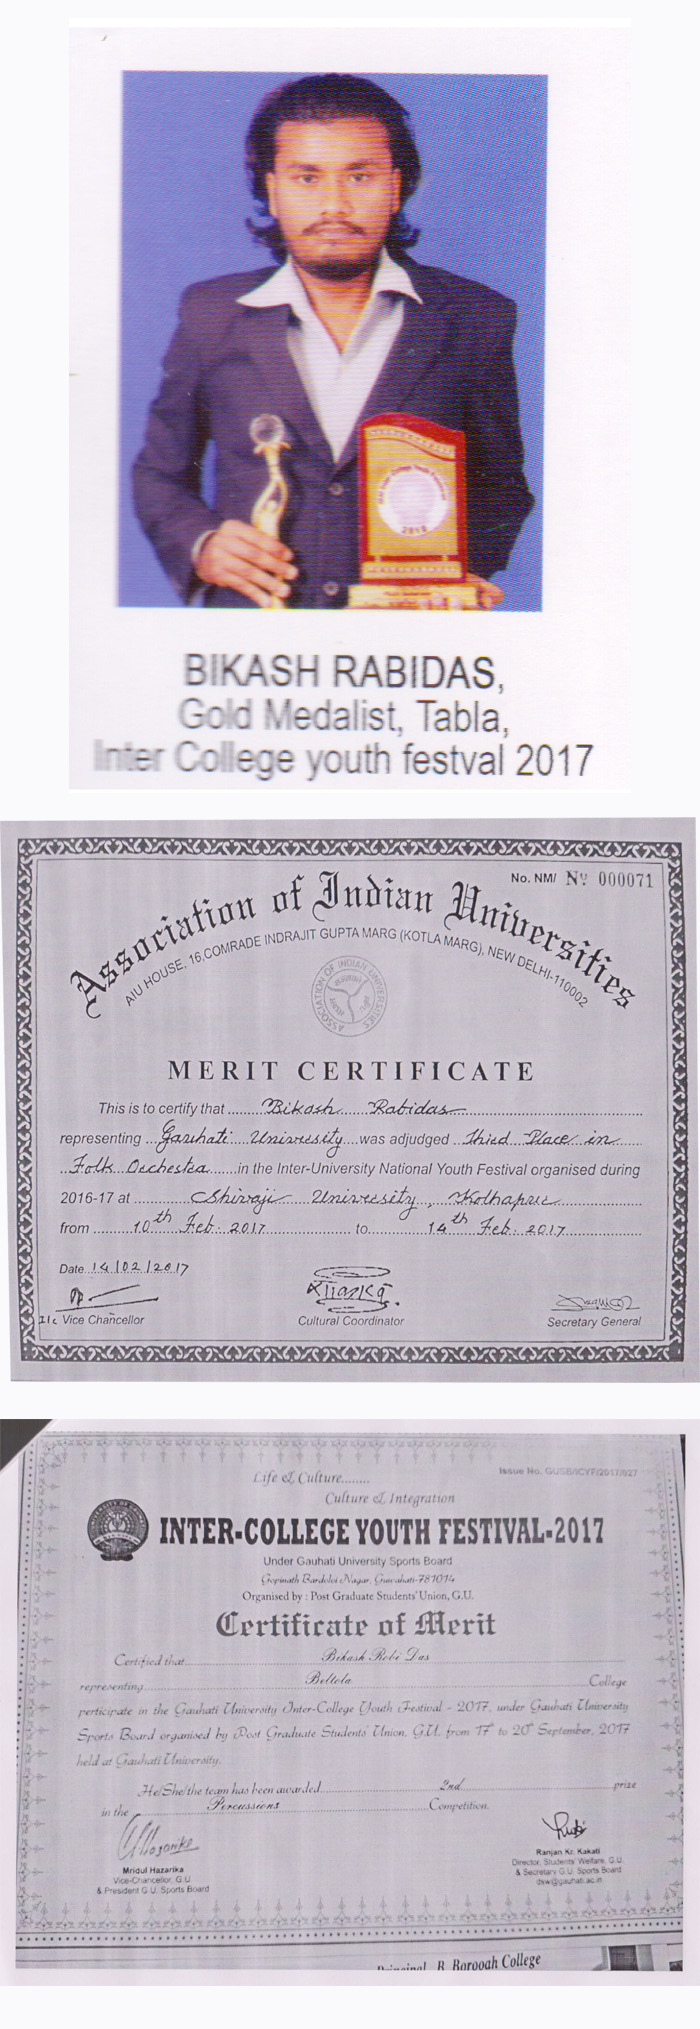 Bikash Rabi Das Gold Medalist Tabla Inter College youth festival 2017